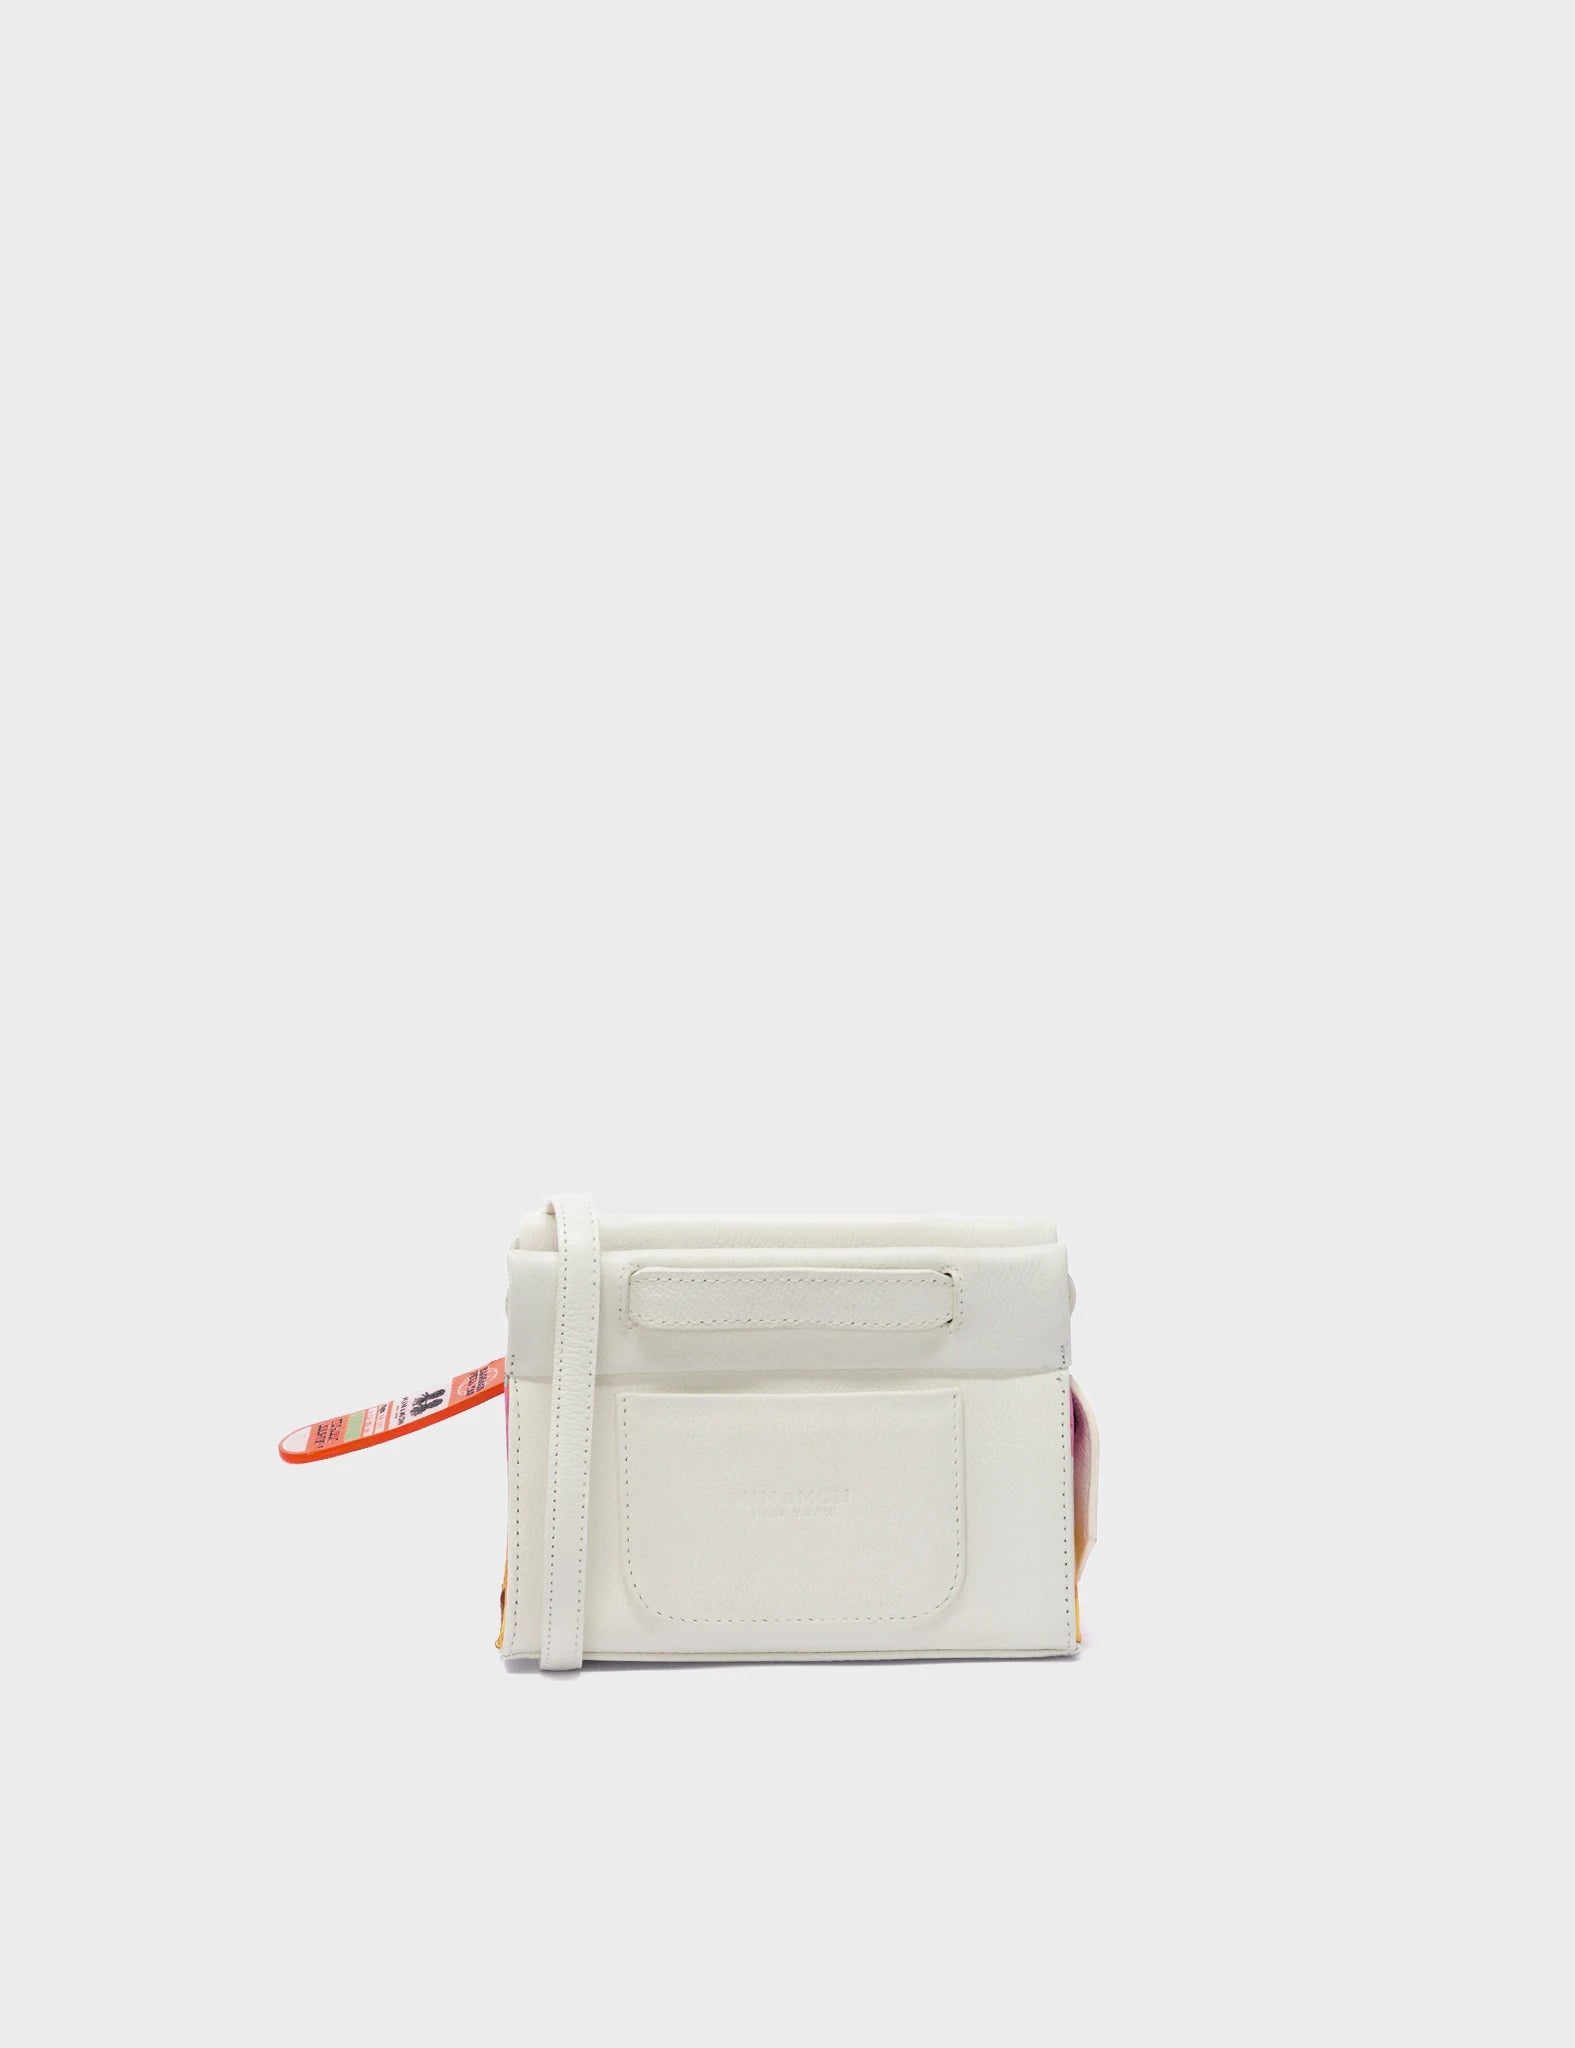 Vali Crossbody Micro Cream Leather Bag - Groovin’ Rainbow Design - Back